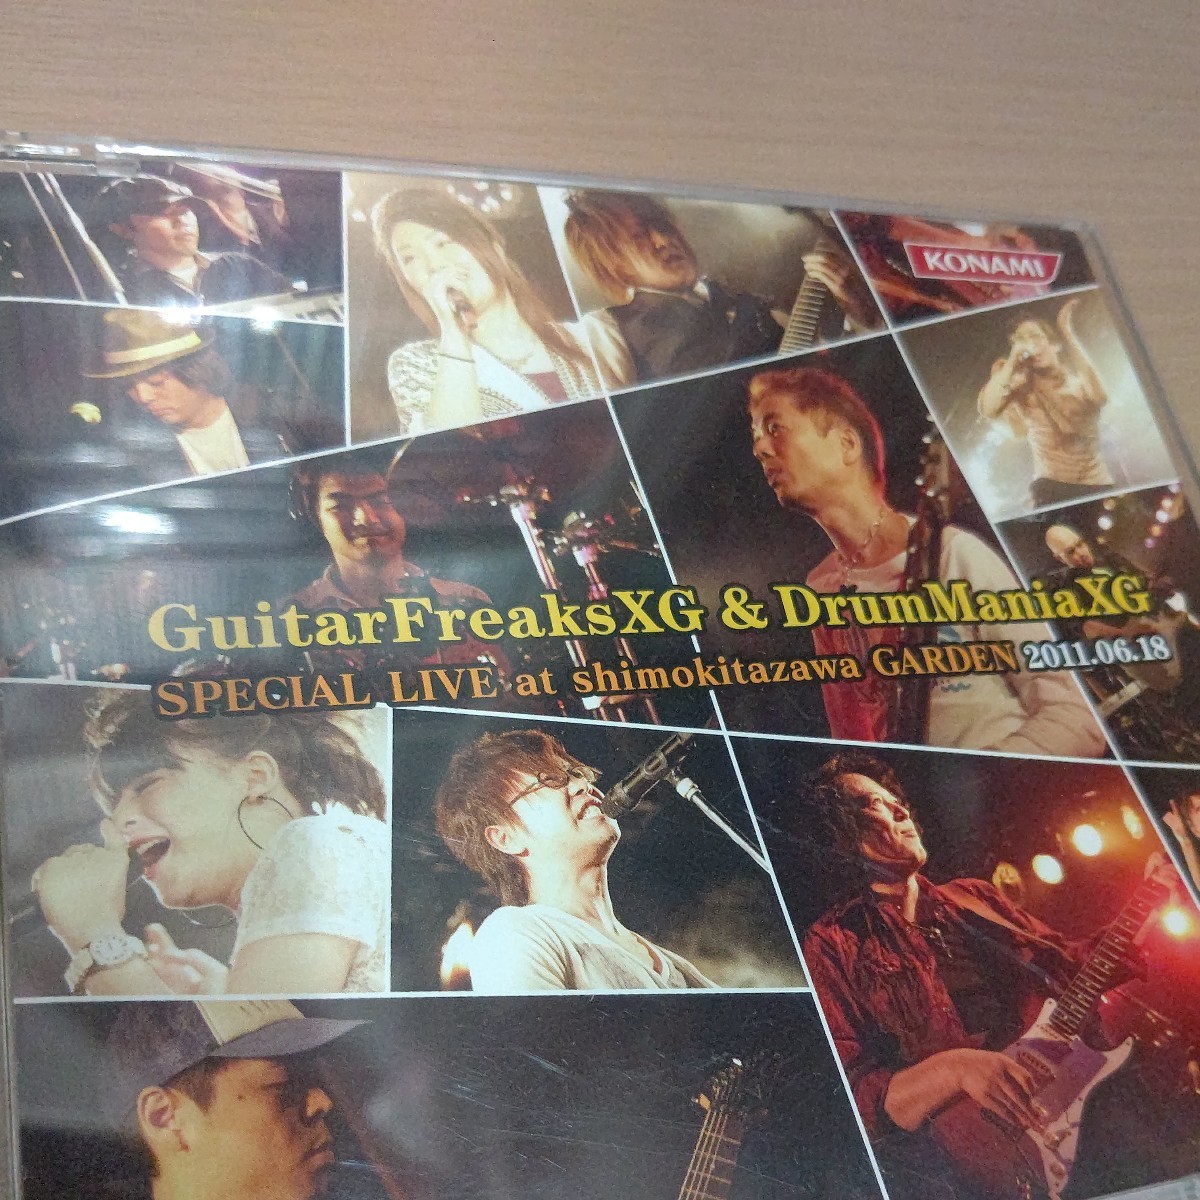 GuitarFreaks XG & DrumMania XG SPECIAL LIVE at shimokitazawa